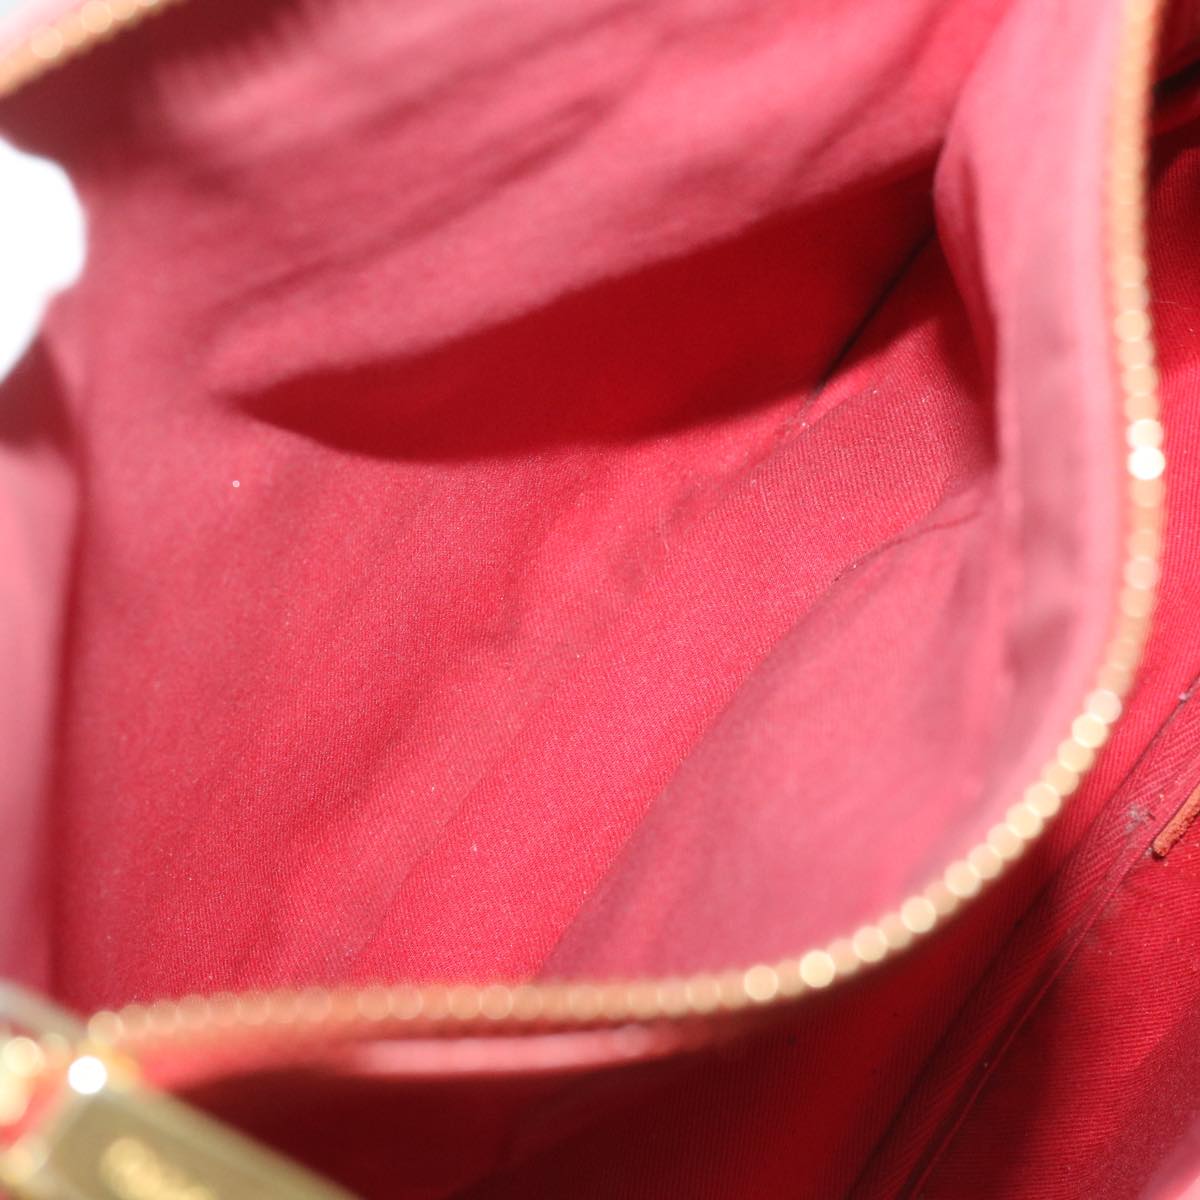 Chloe Eden Shoulder Bag Leather Red Auth yb404